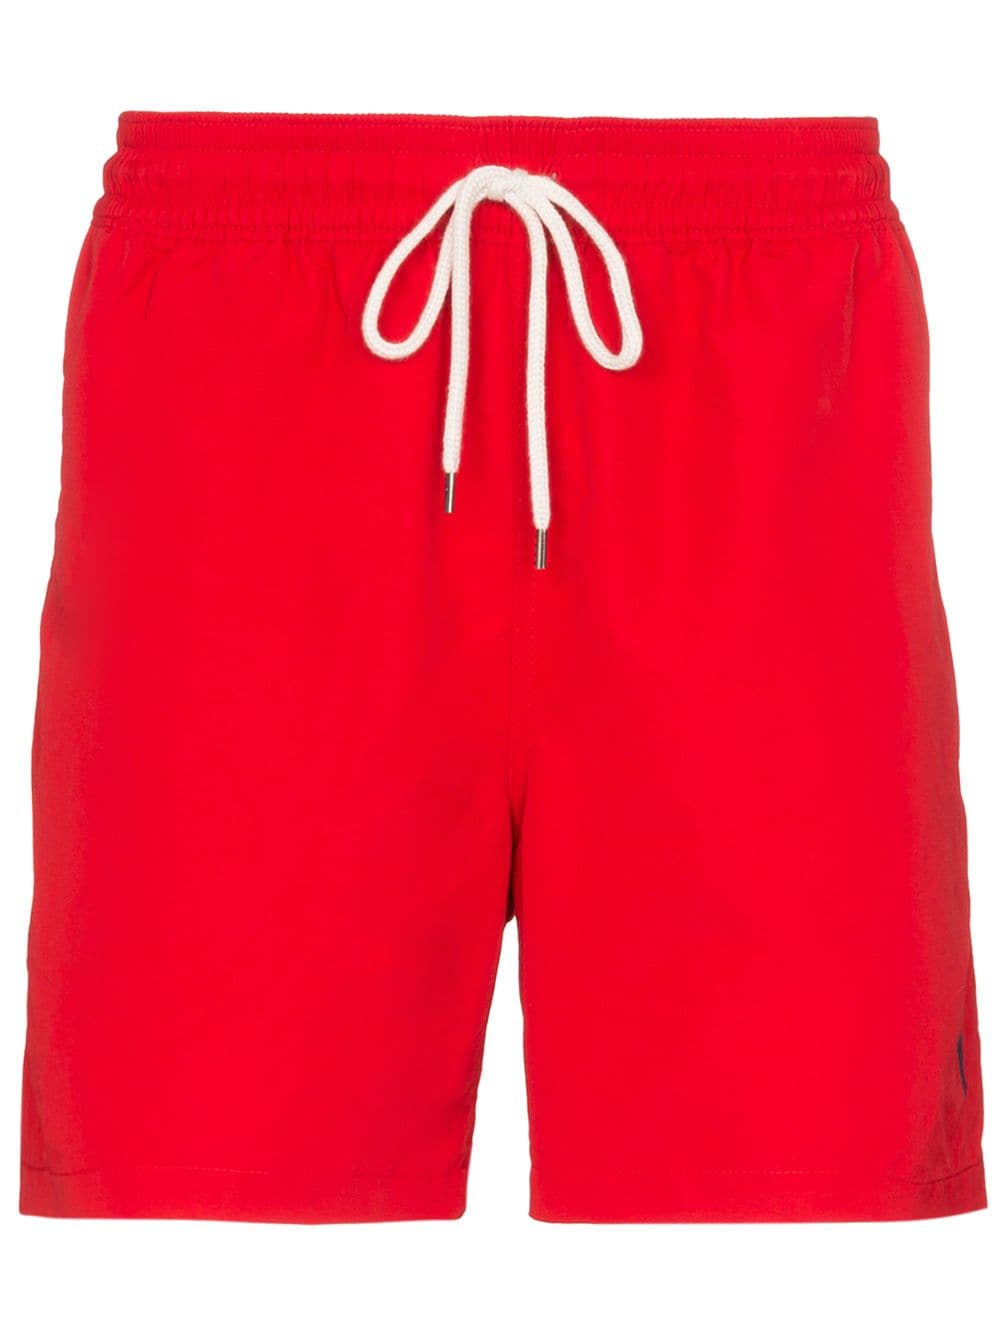 Polo Ralph Lauren плавки-шорты Traveller с кулиской от Polo Ralph Lauren